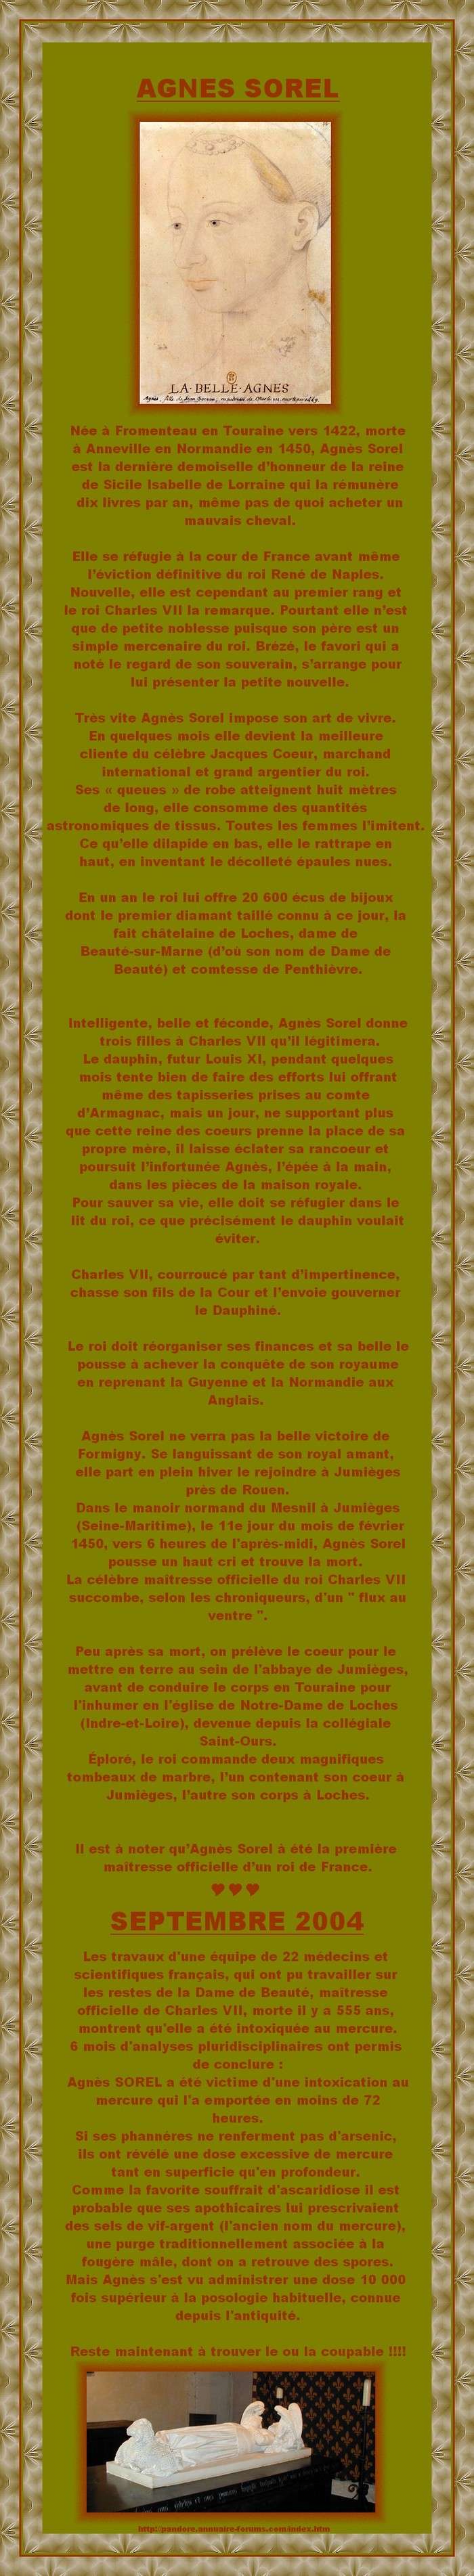 AGNES SOREL FAVORITE DE CHARLES VII 000136